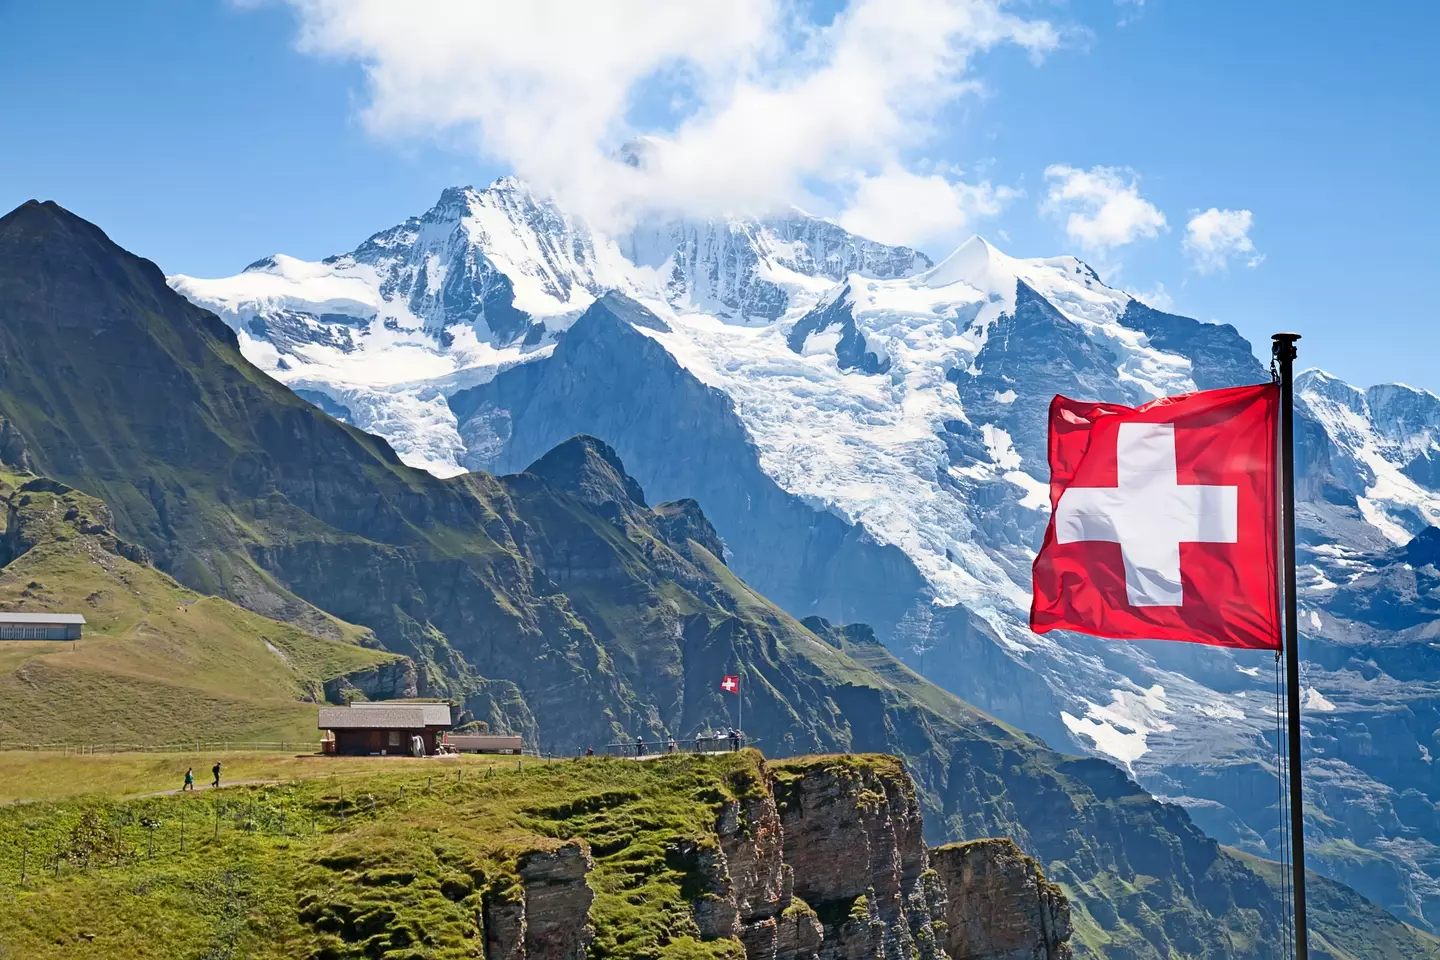 Switzerland is full of scenic spots to explore.